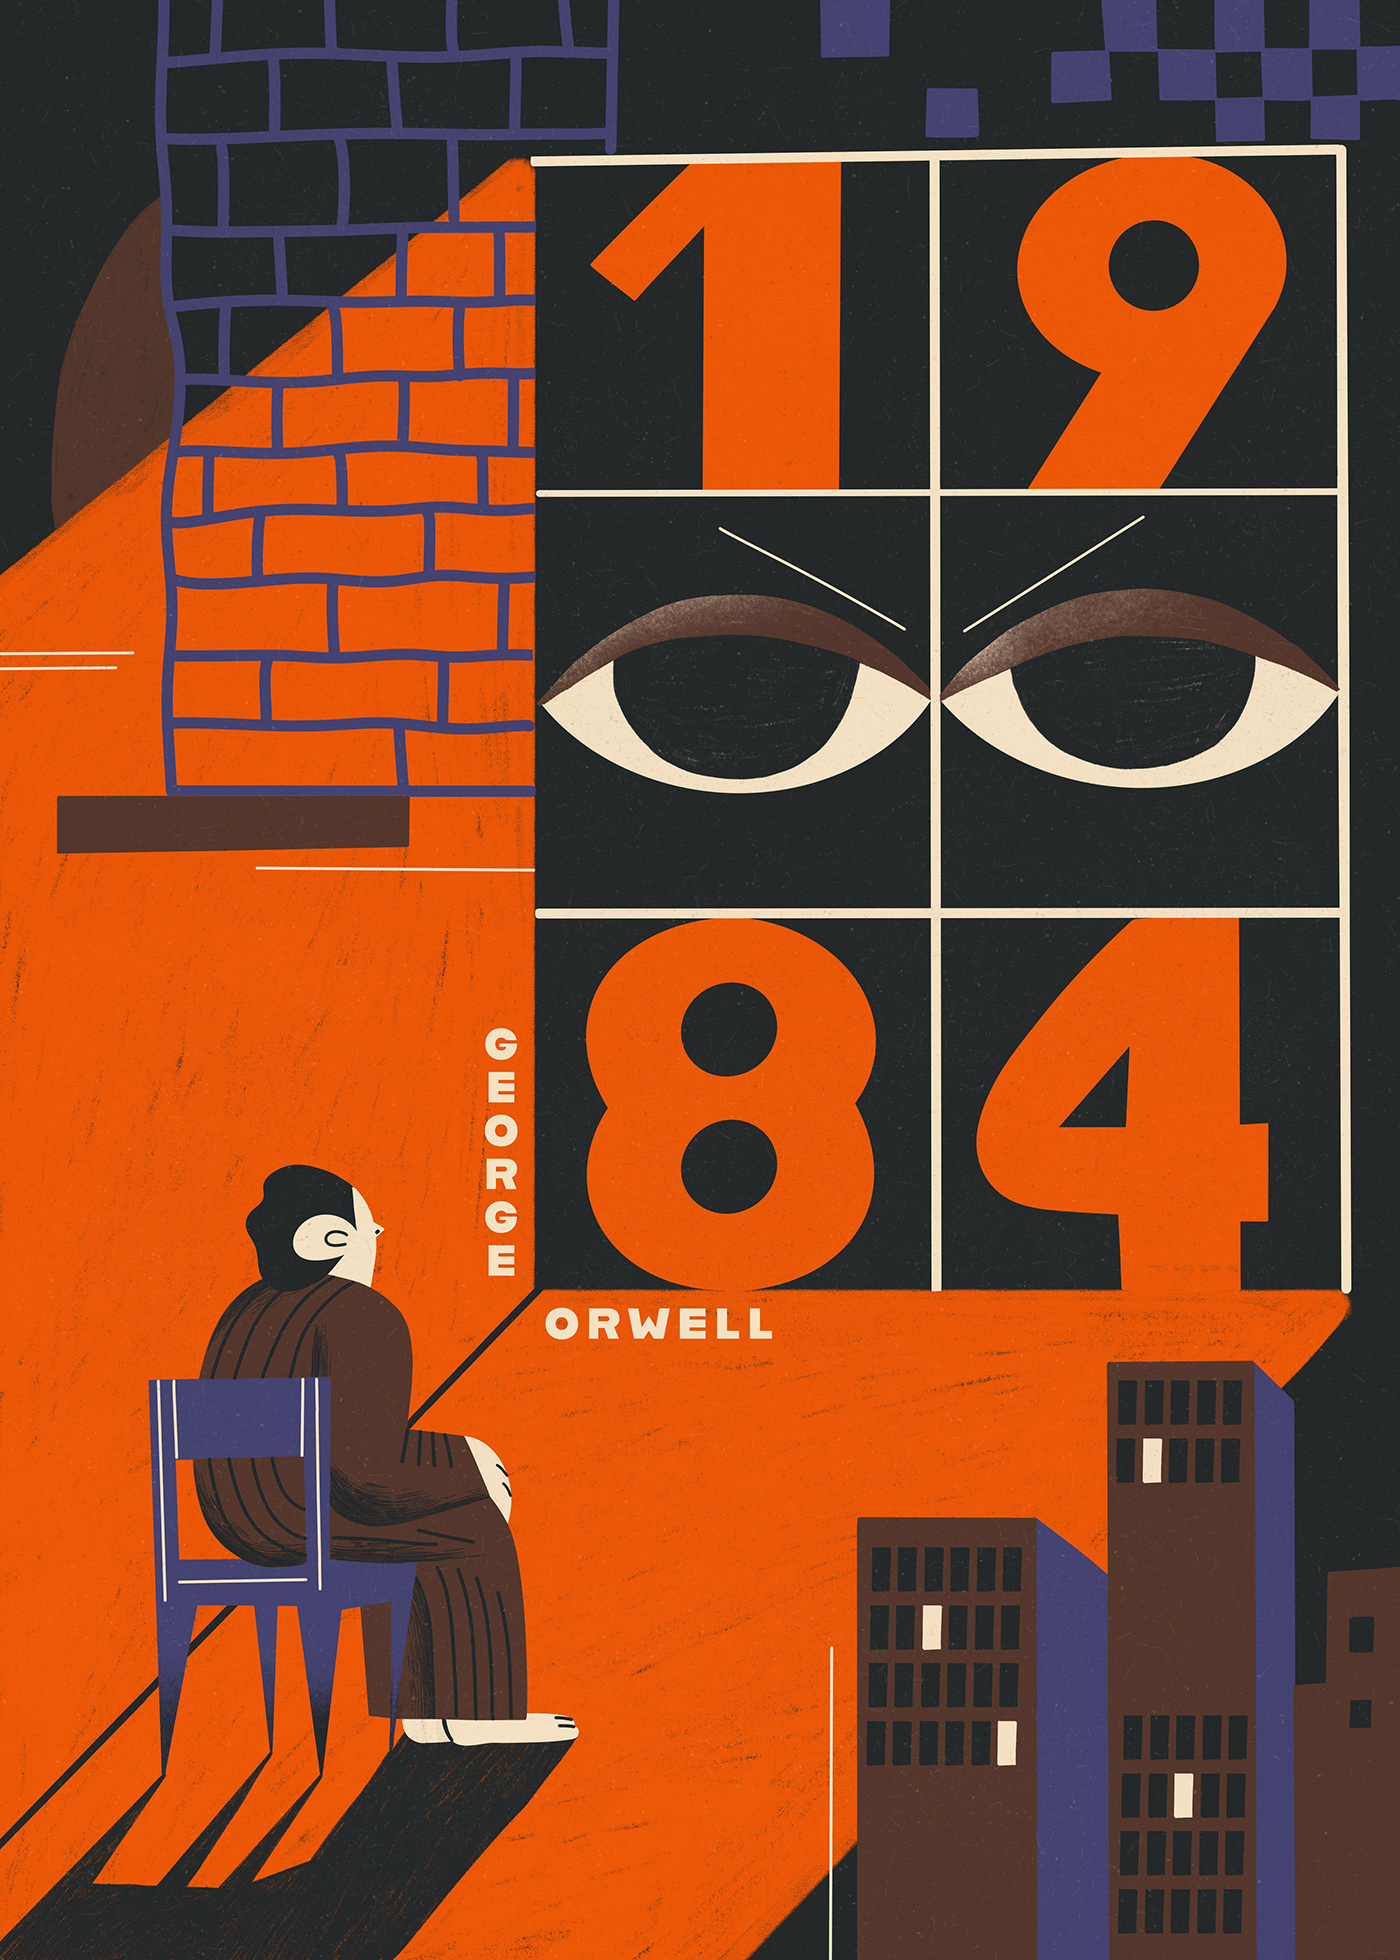 coverdesign coverbook coverbookillustration graphic design  designer Cover Art 1984 george orwell 1984 book George Orwell coverbookdesign